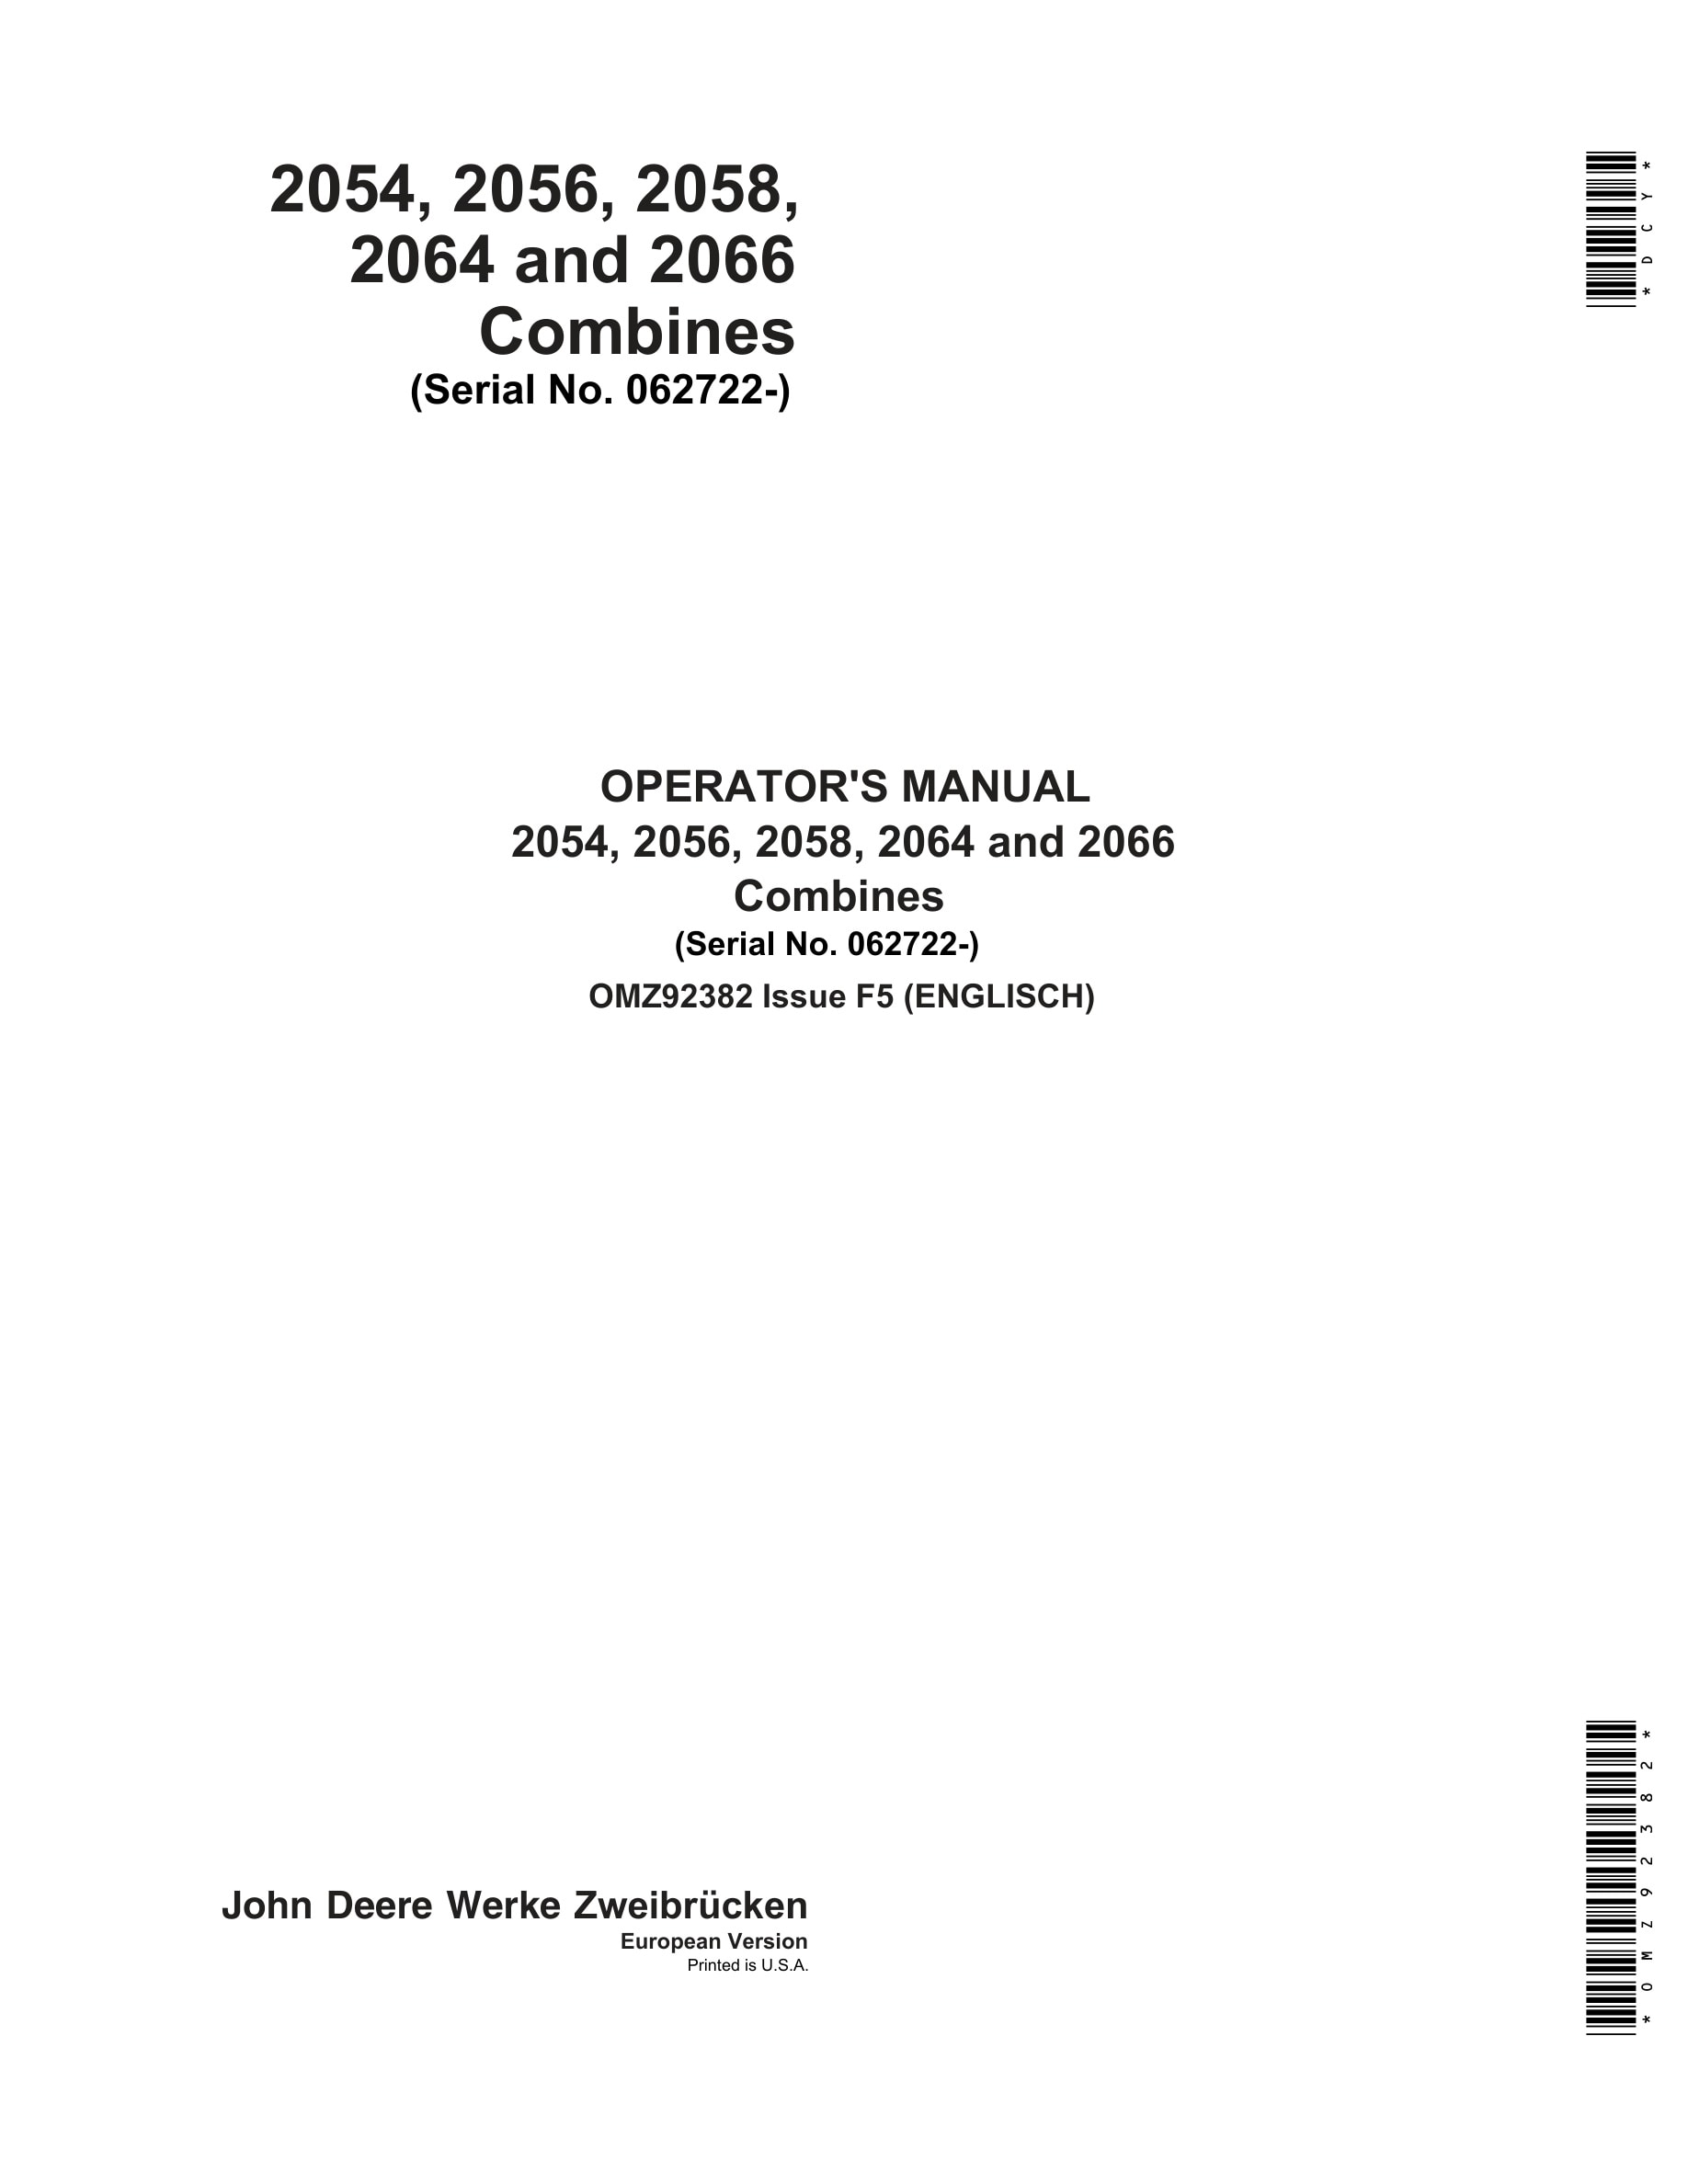 John Deere 2054, 2056, 2058, 2064 and 2066 Combine Operator Manual OMZ92382-1